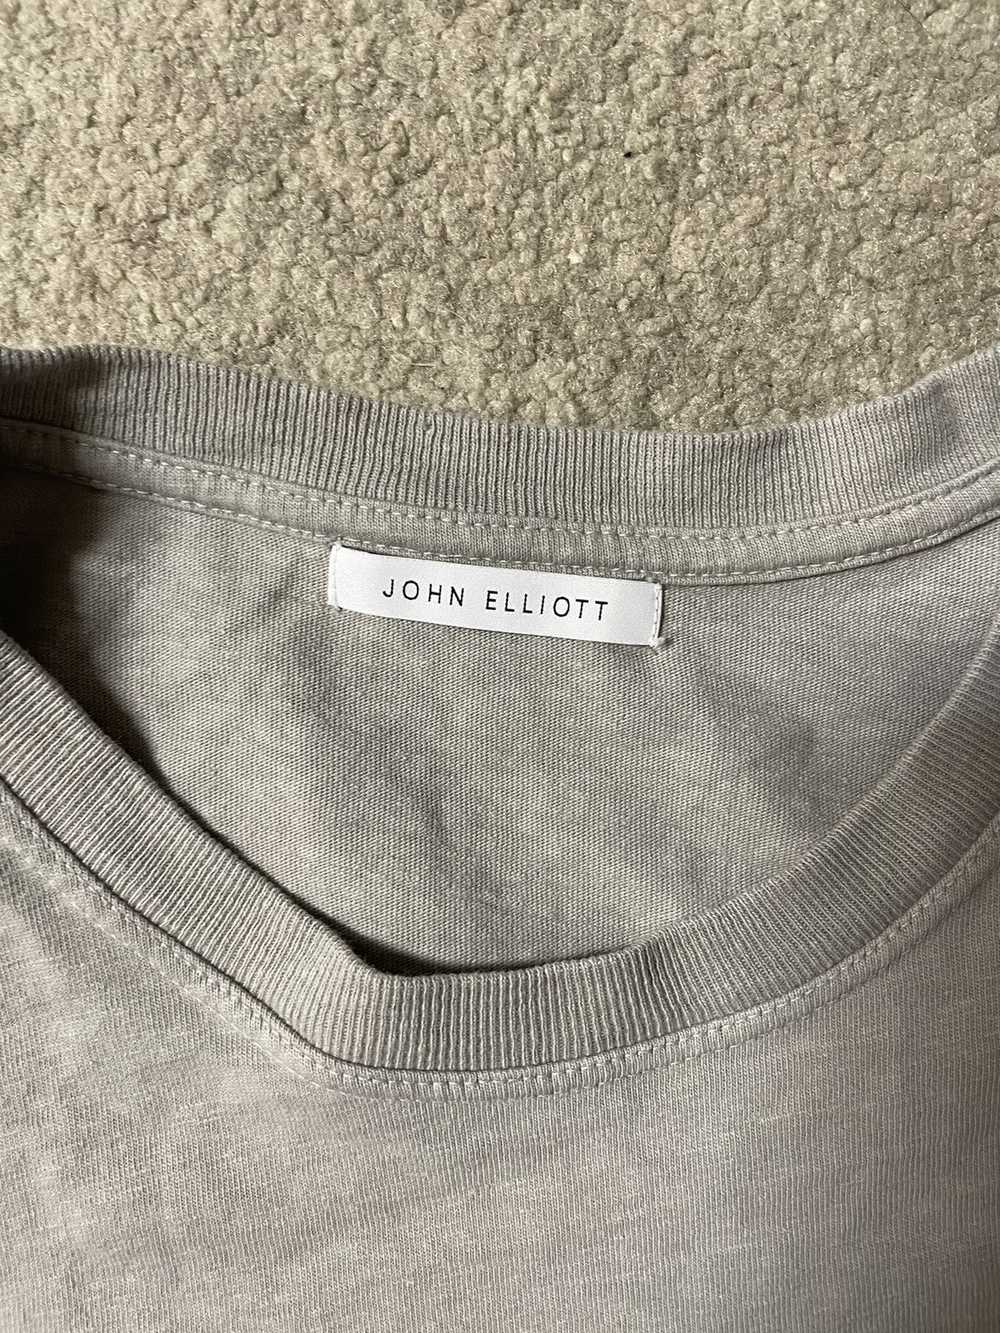 John Elliott John Elliott Anti Expo shirt (grey) - image 2